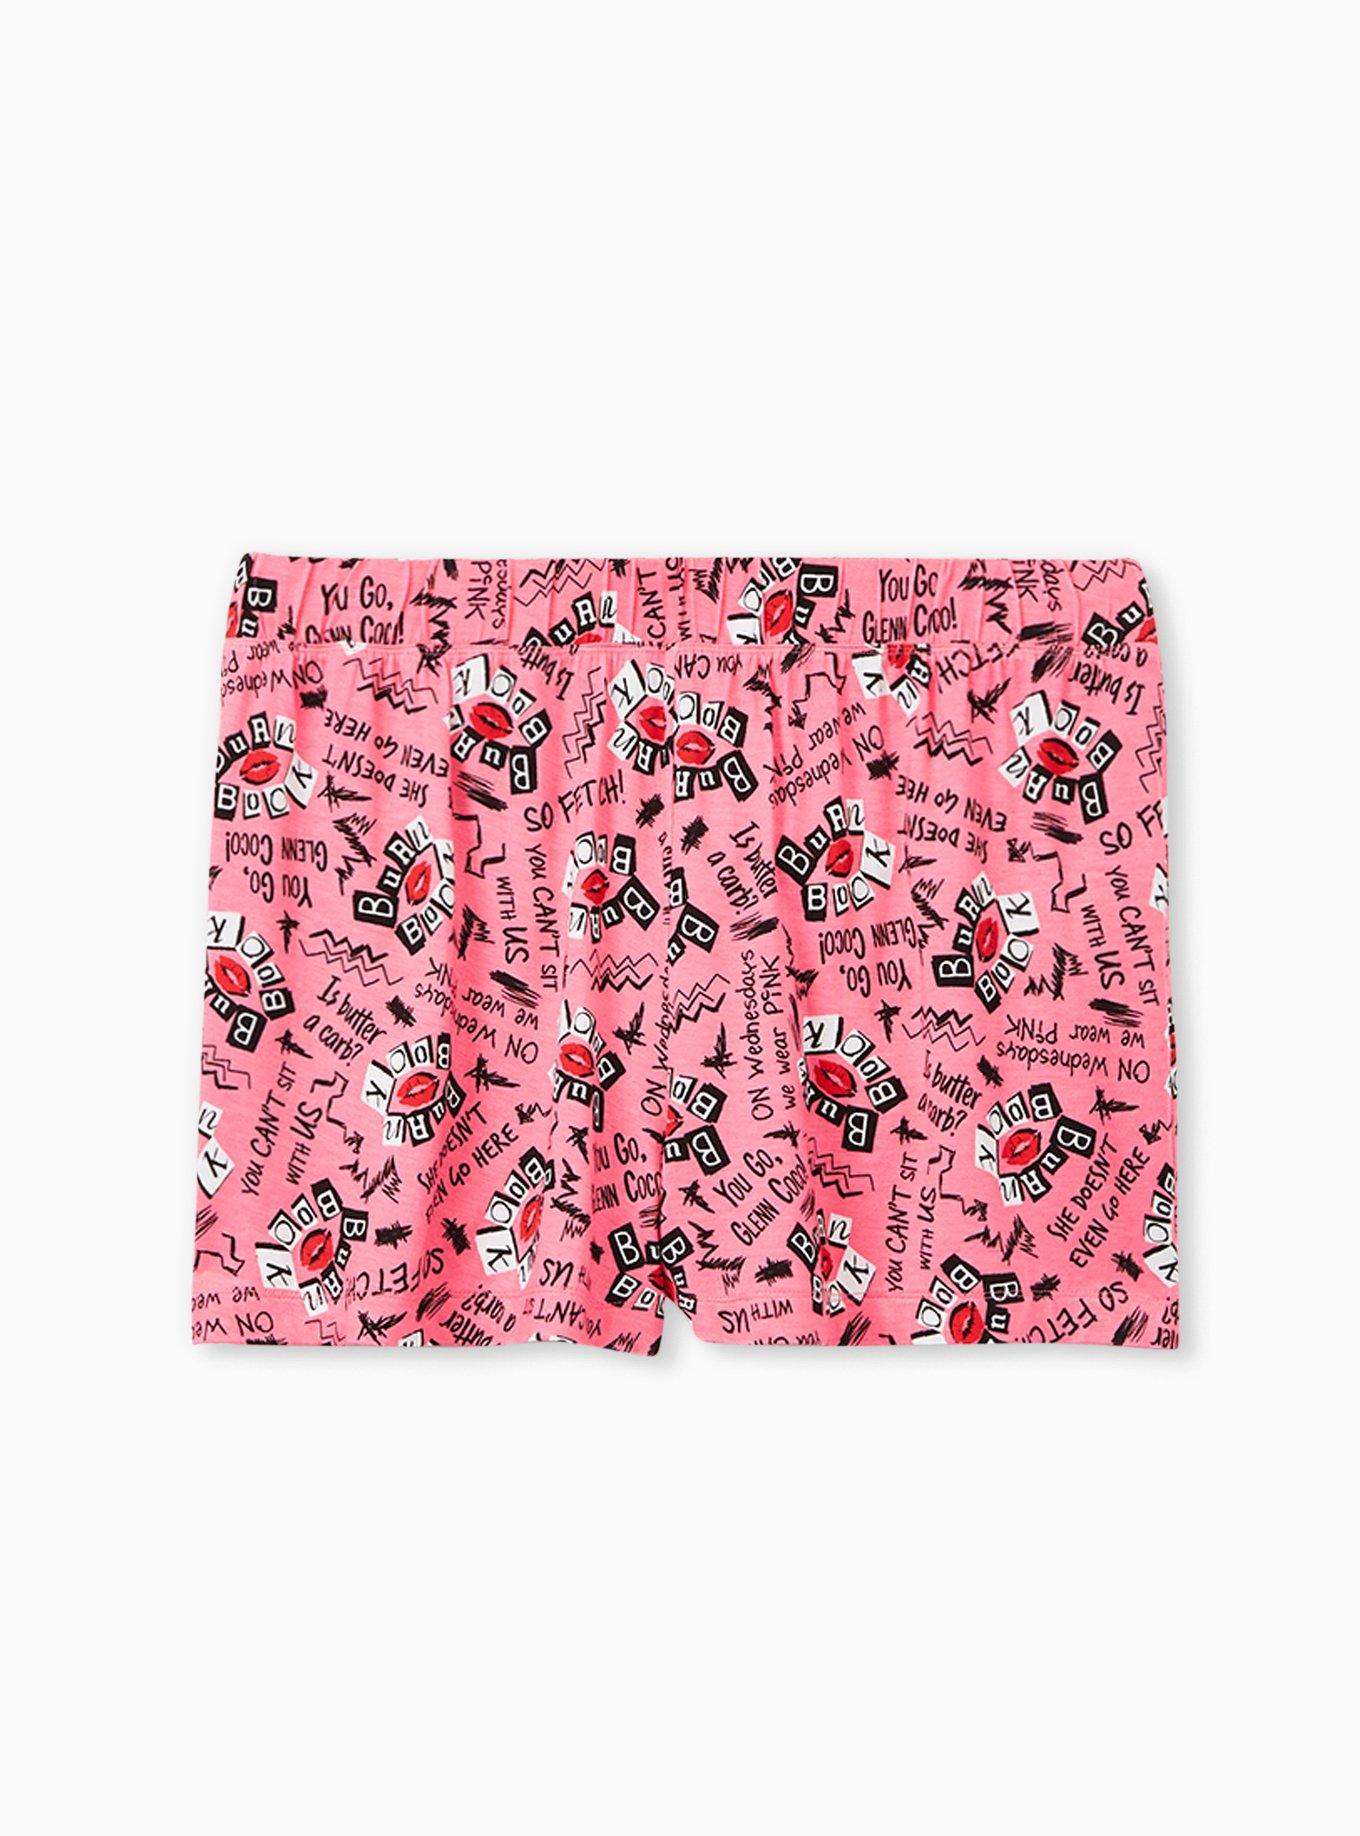 Mean Girls Womens' Burn Book Sleep Lounge Pajama Pants (SM) Multicoloured